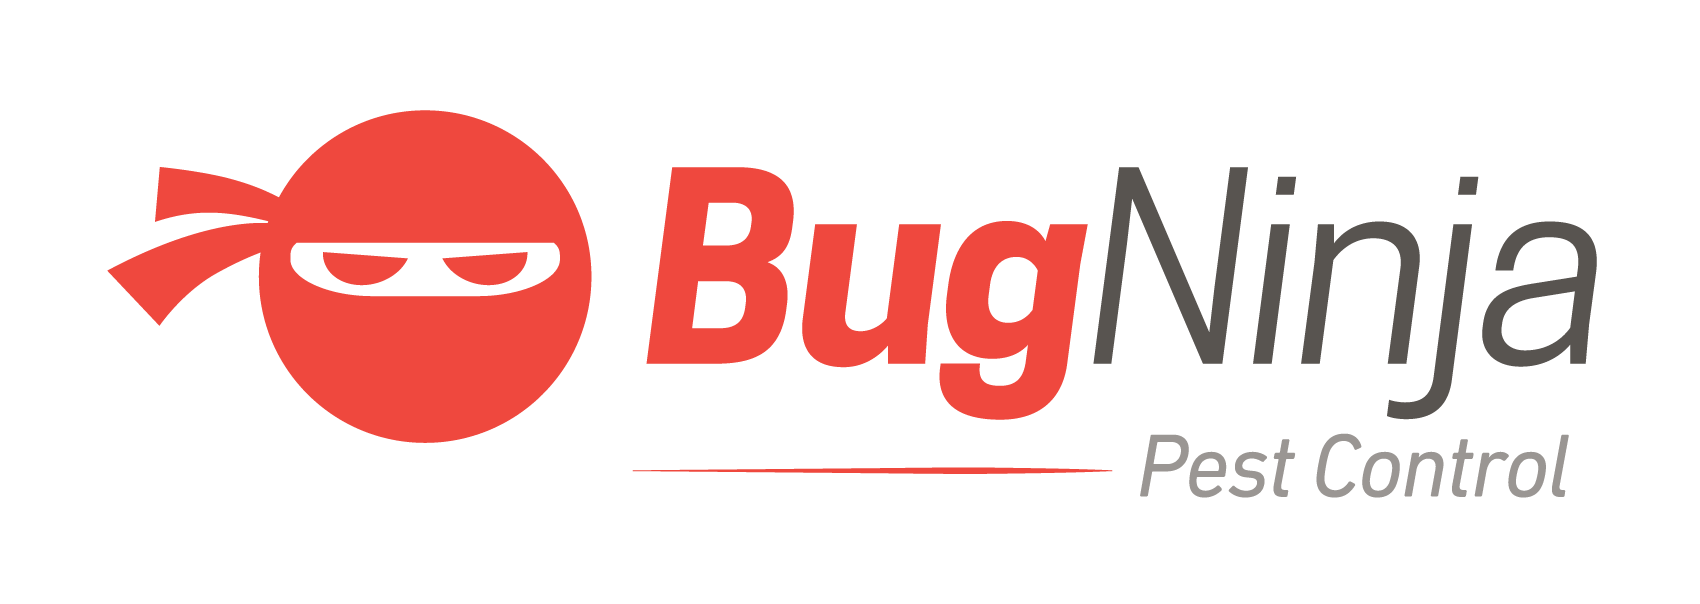 Picture of Bug Ninja Pest Control logo